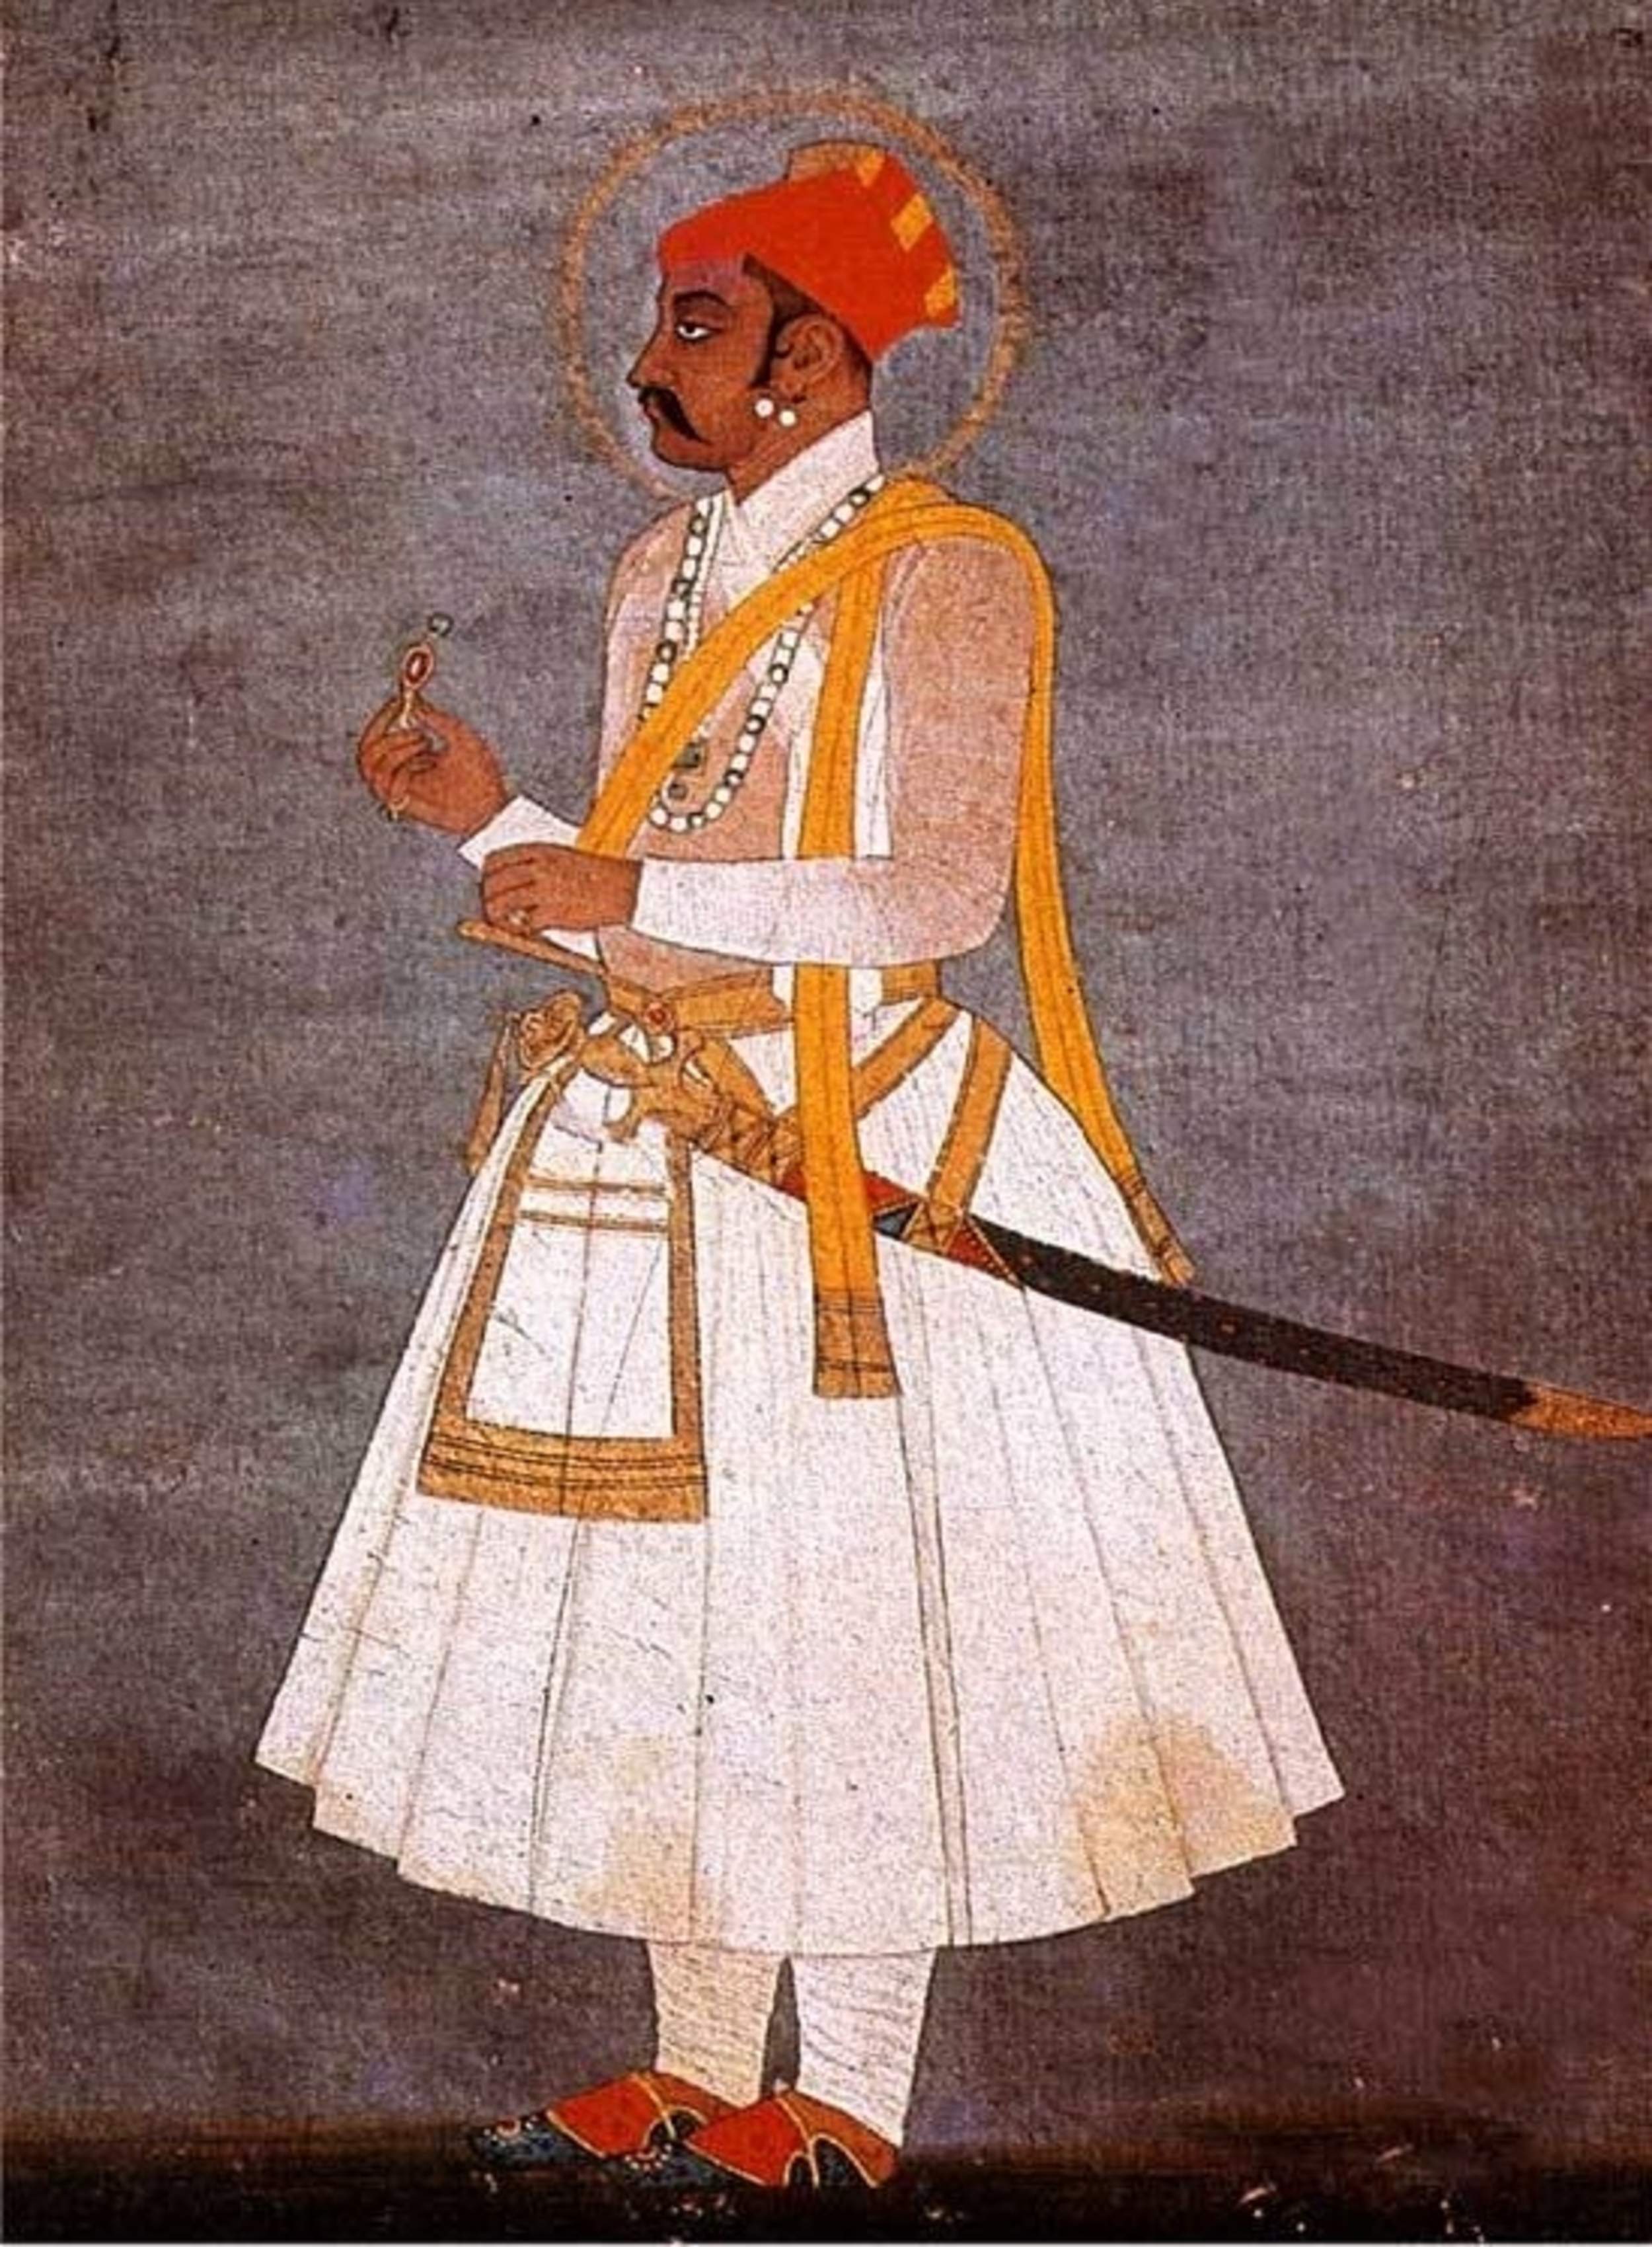 Maharaja Sawai Jai Singh II (PC – www.jaipurbeat.com)